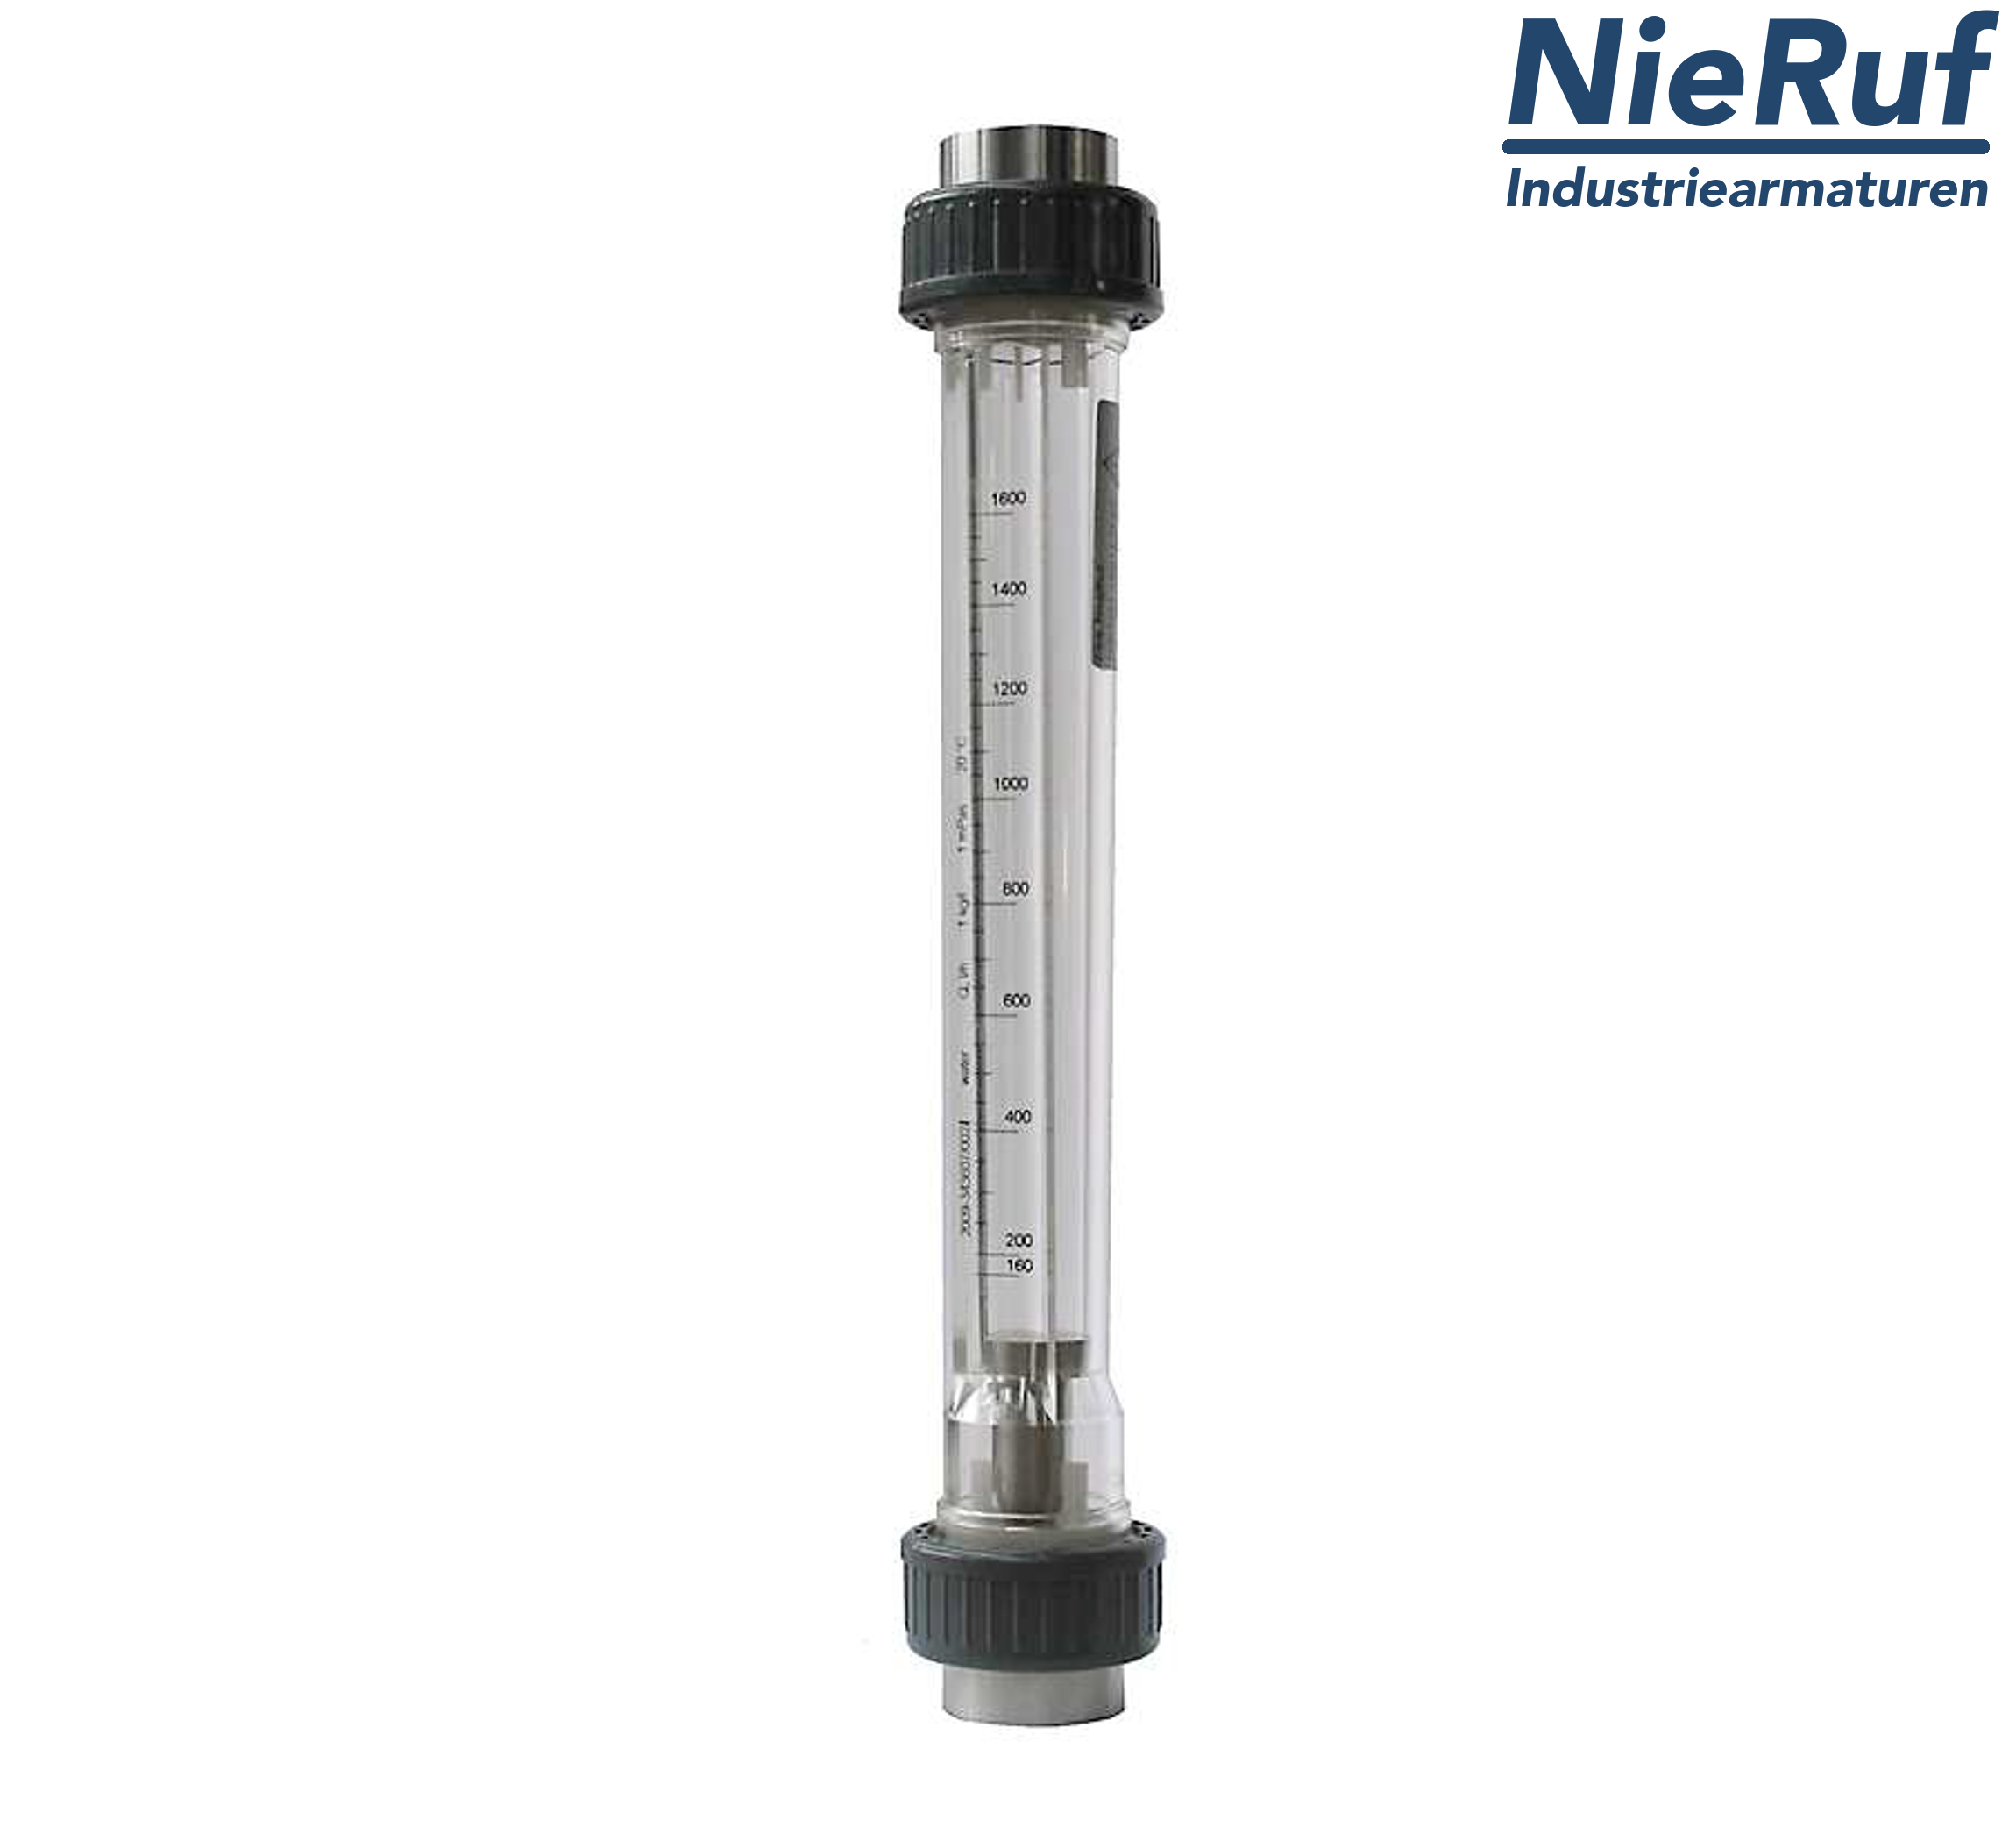 Variable area flowmeter 1" inch NPT 160.0 - 1600 l/h water EPDM